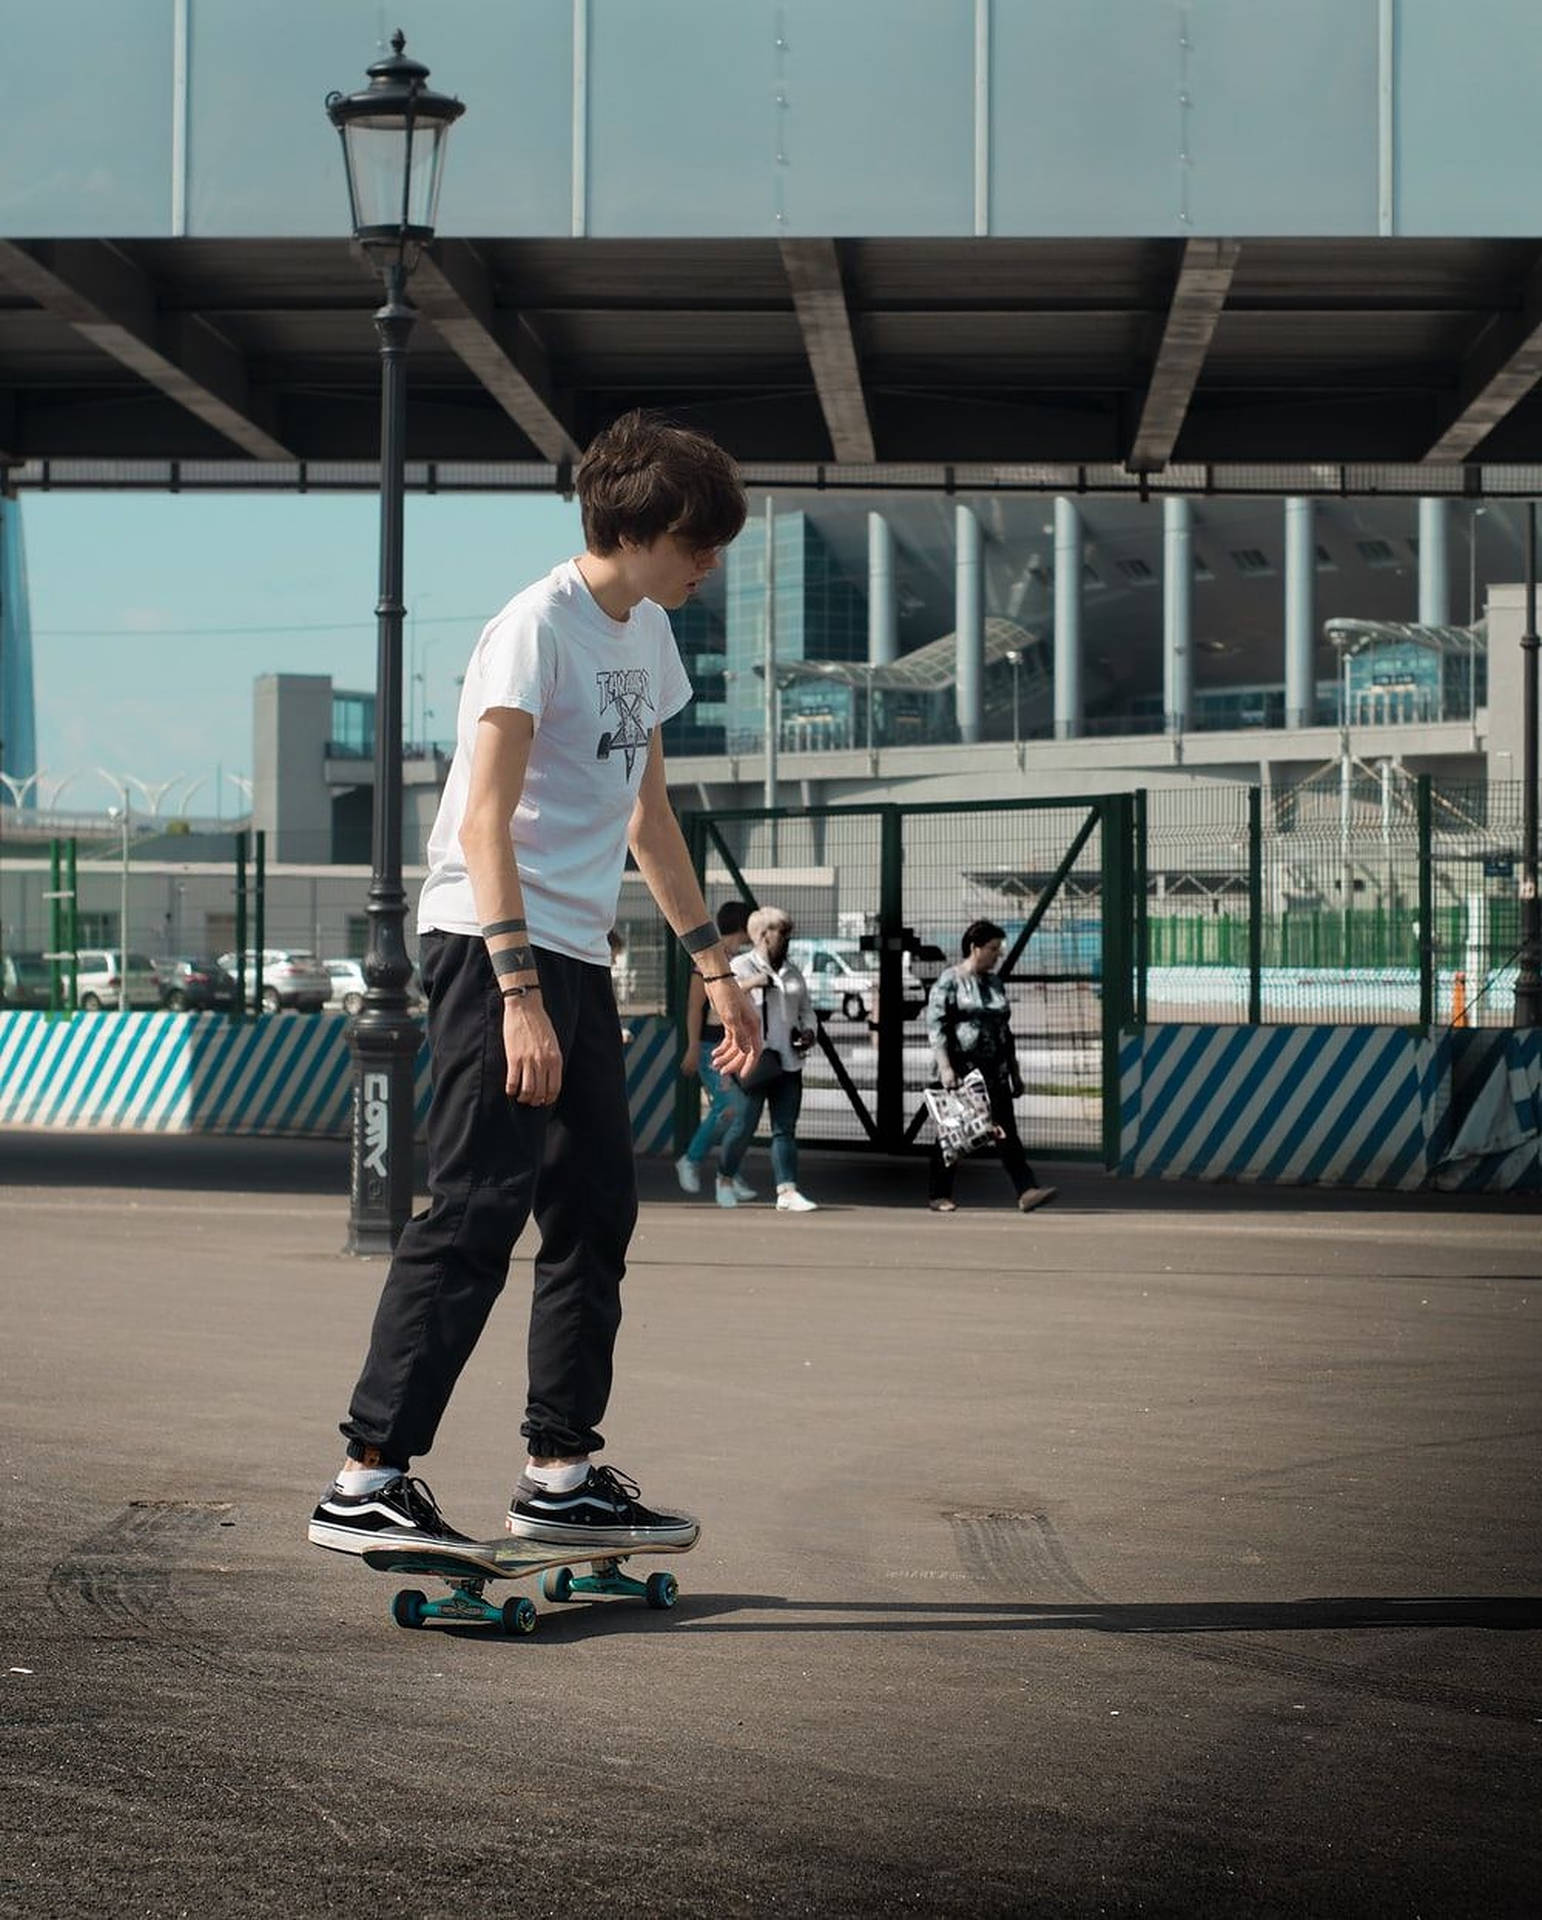 Aesthetic Skater Boy Portrait Background